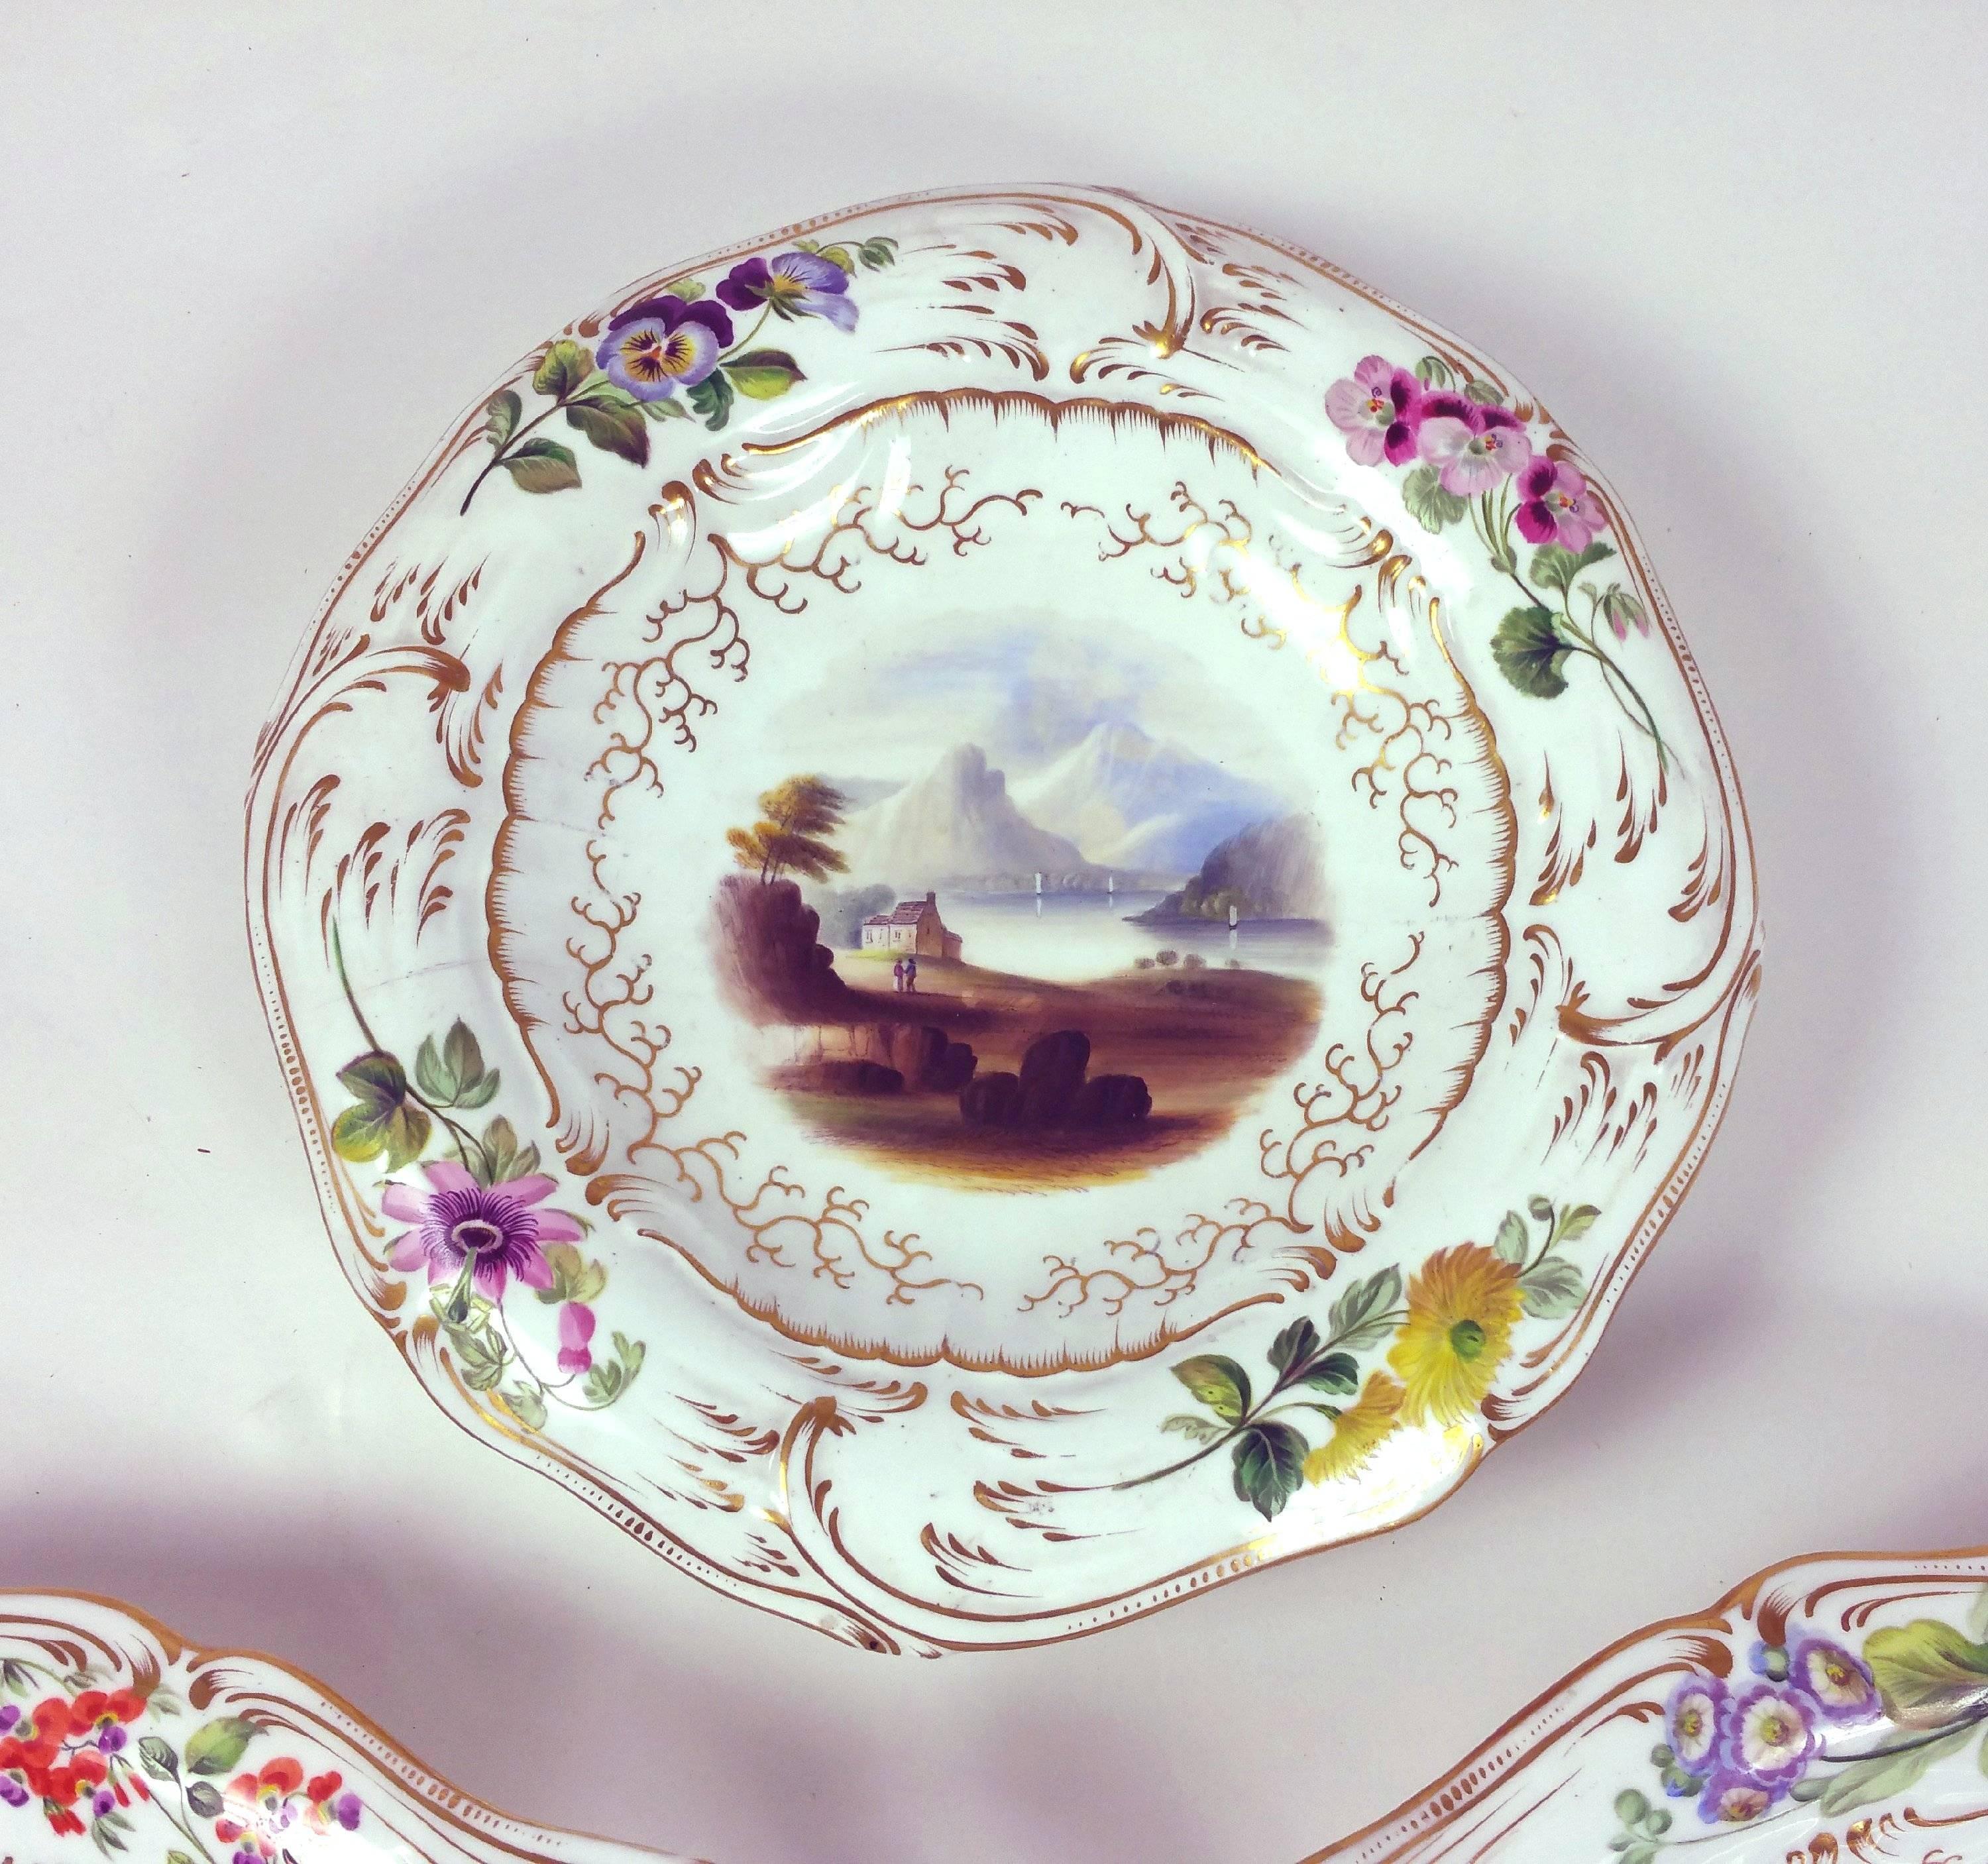 Ceramic Mid-19th Century English Pottery Hand-Painted Dessert Service